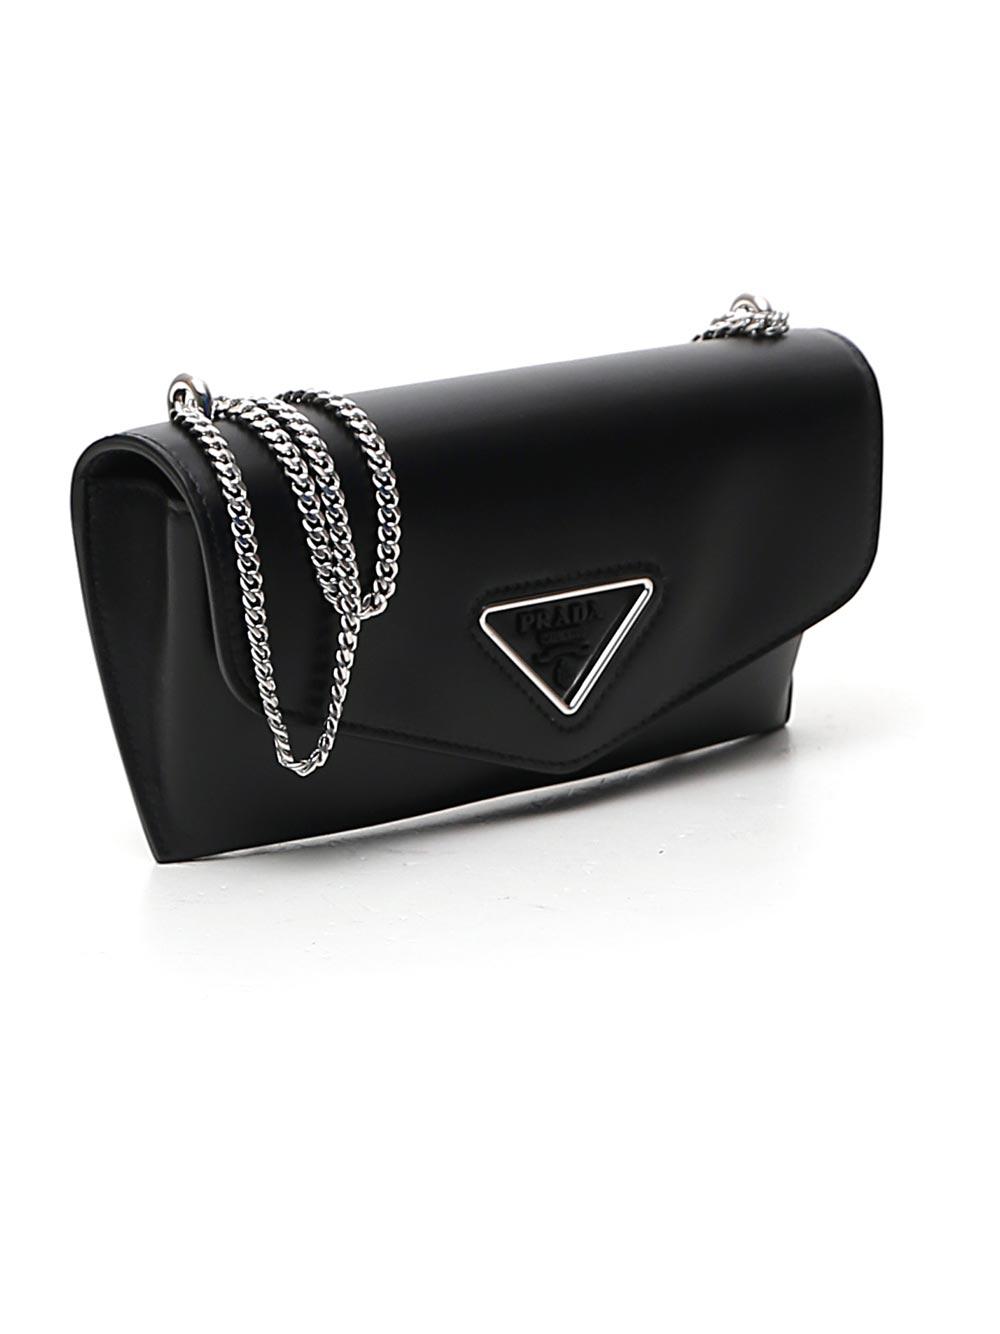 Prada Strapped Envelope Clutch Bag in Black | Lyst